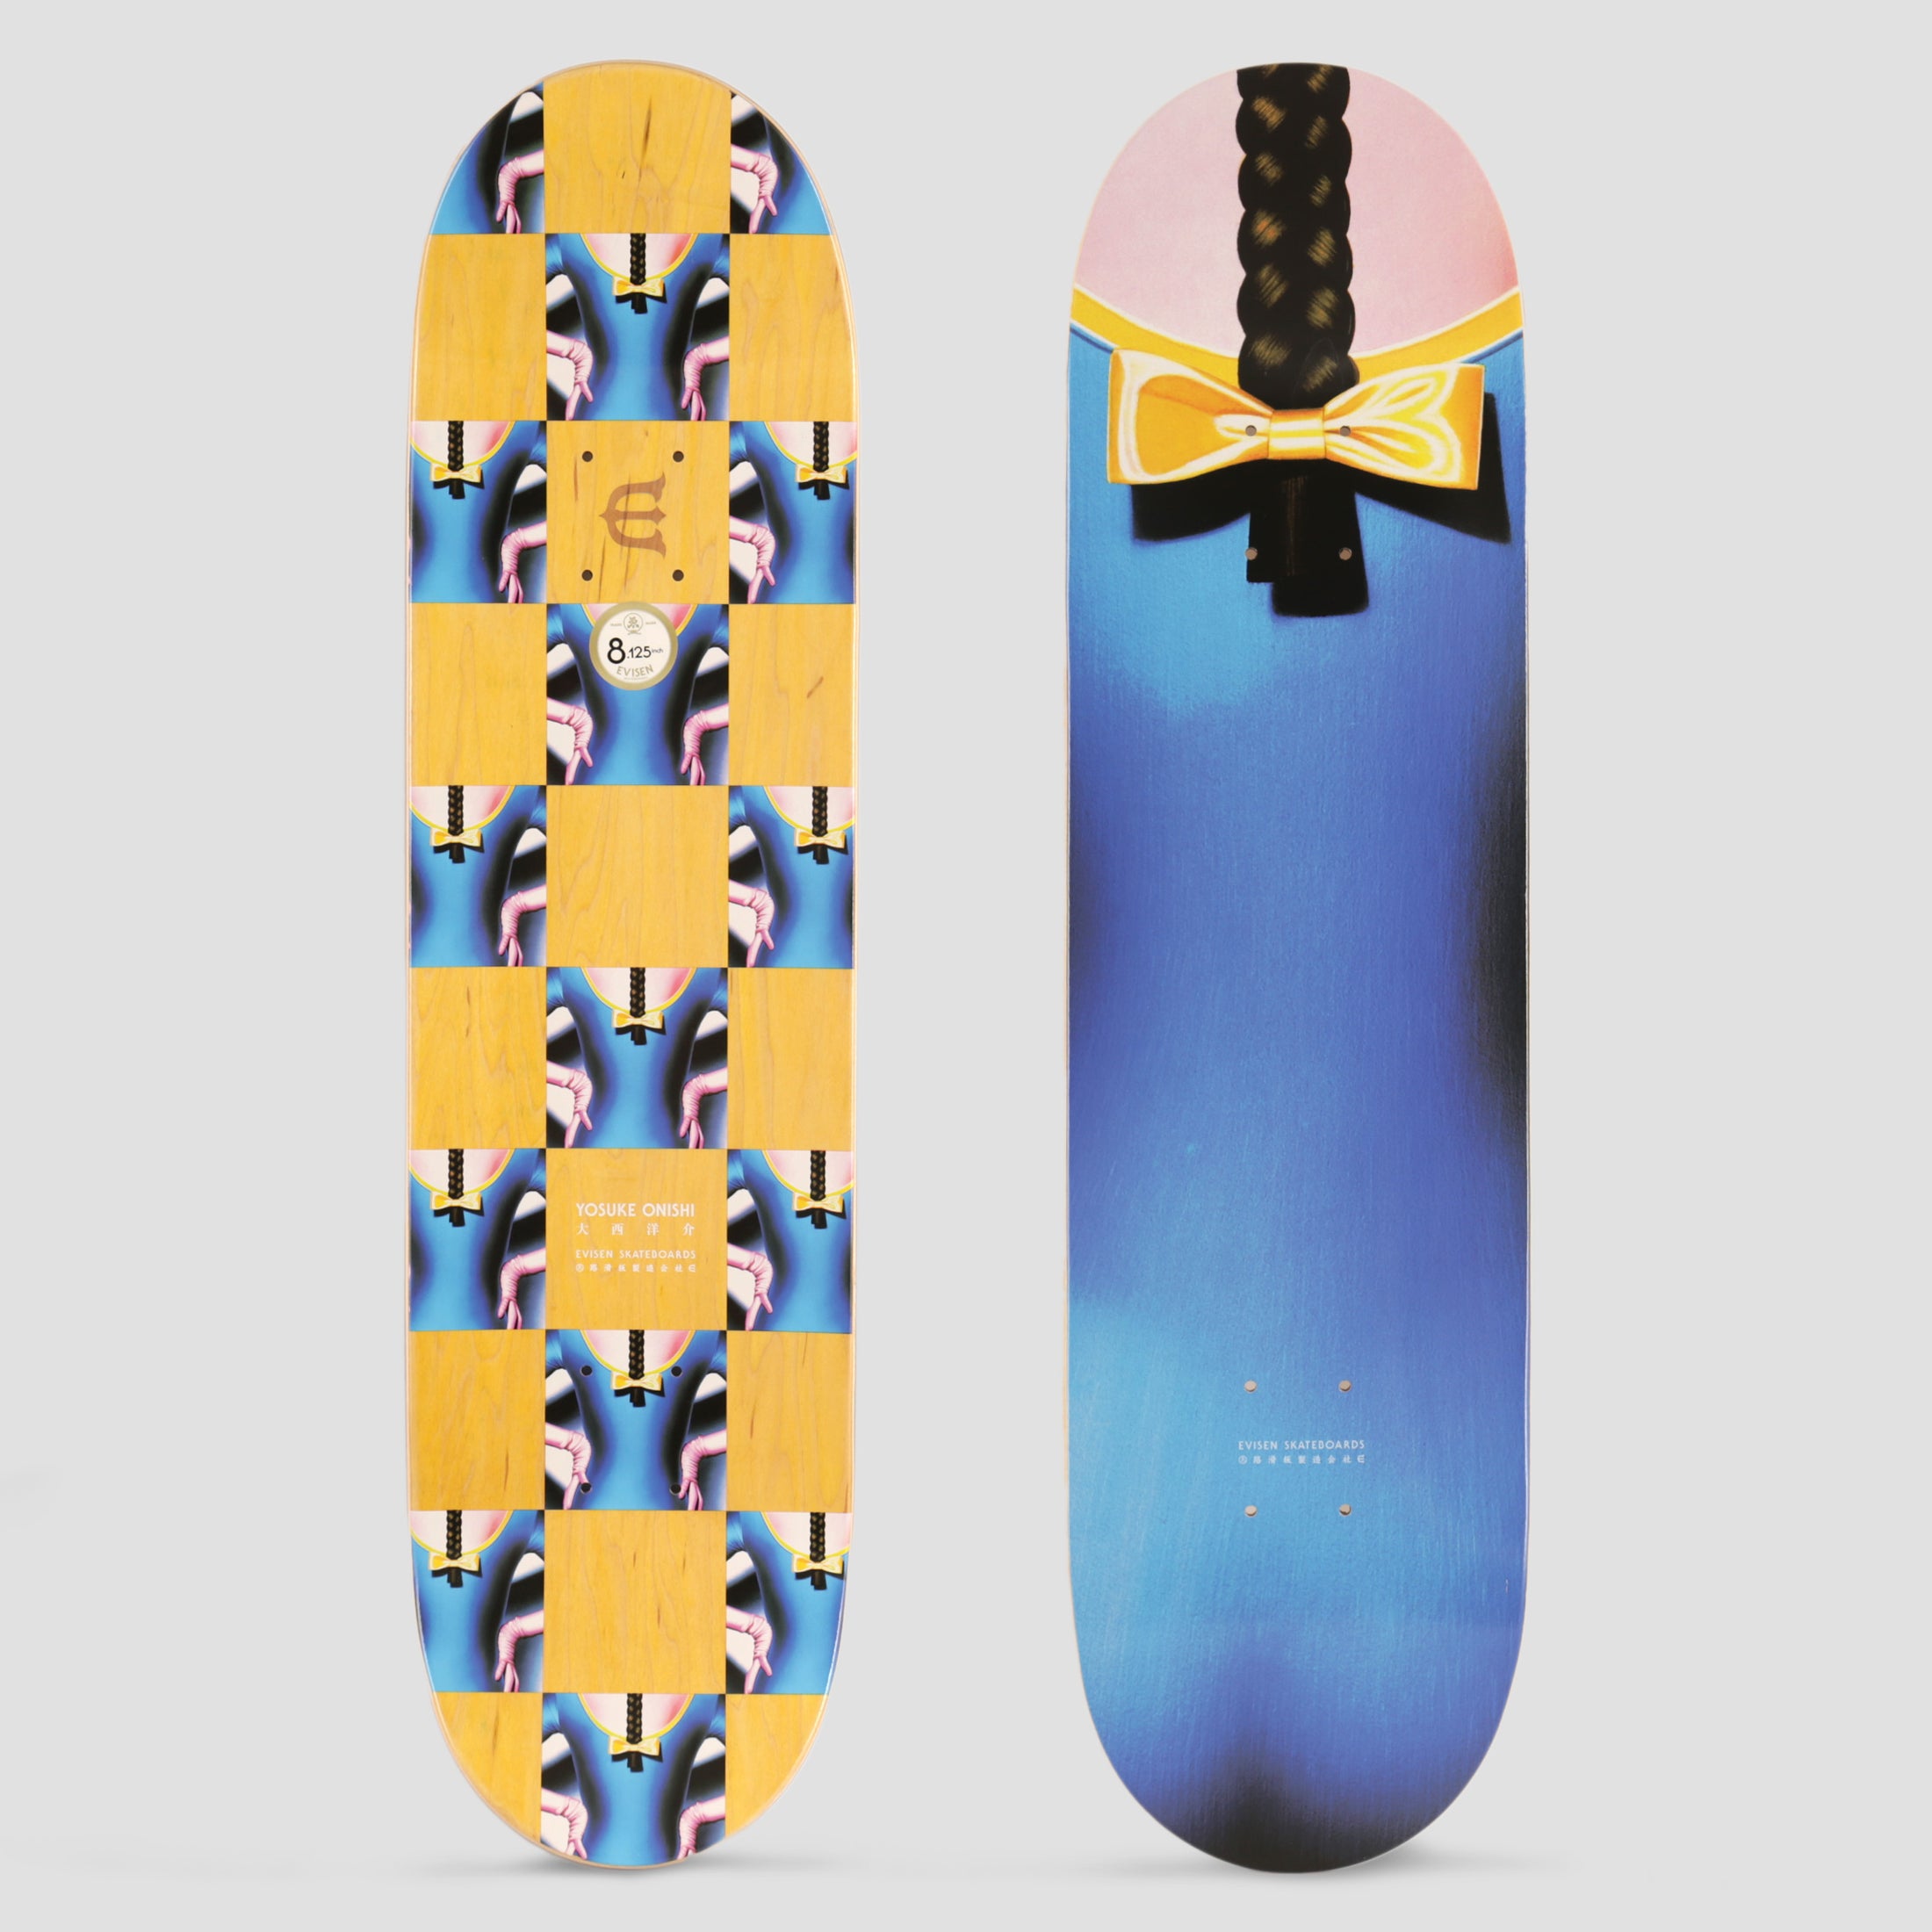 Evisen 7.8 Yosuke Onishi Yellow Ribbon Skateboard Deck